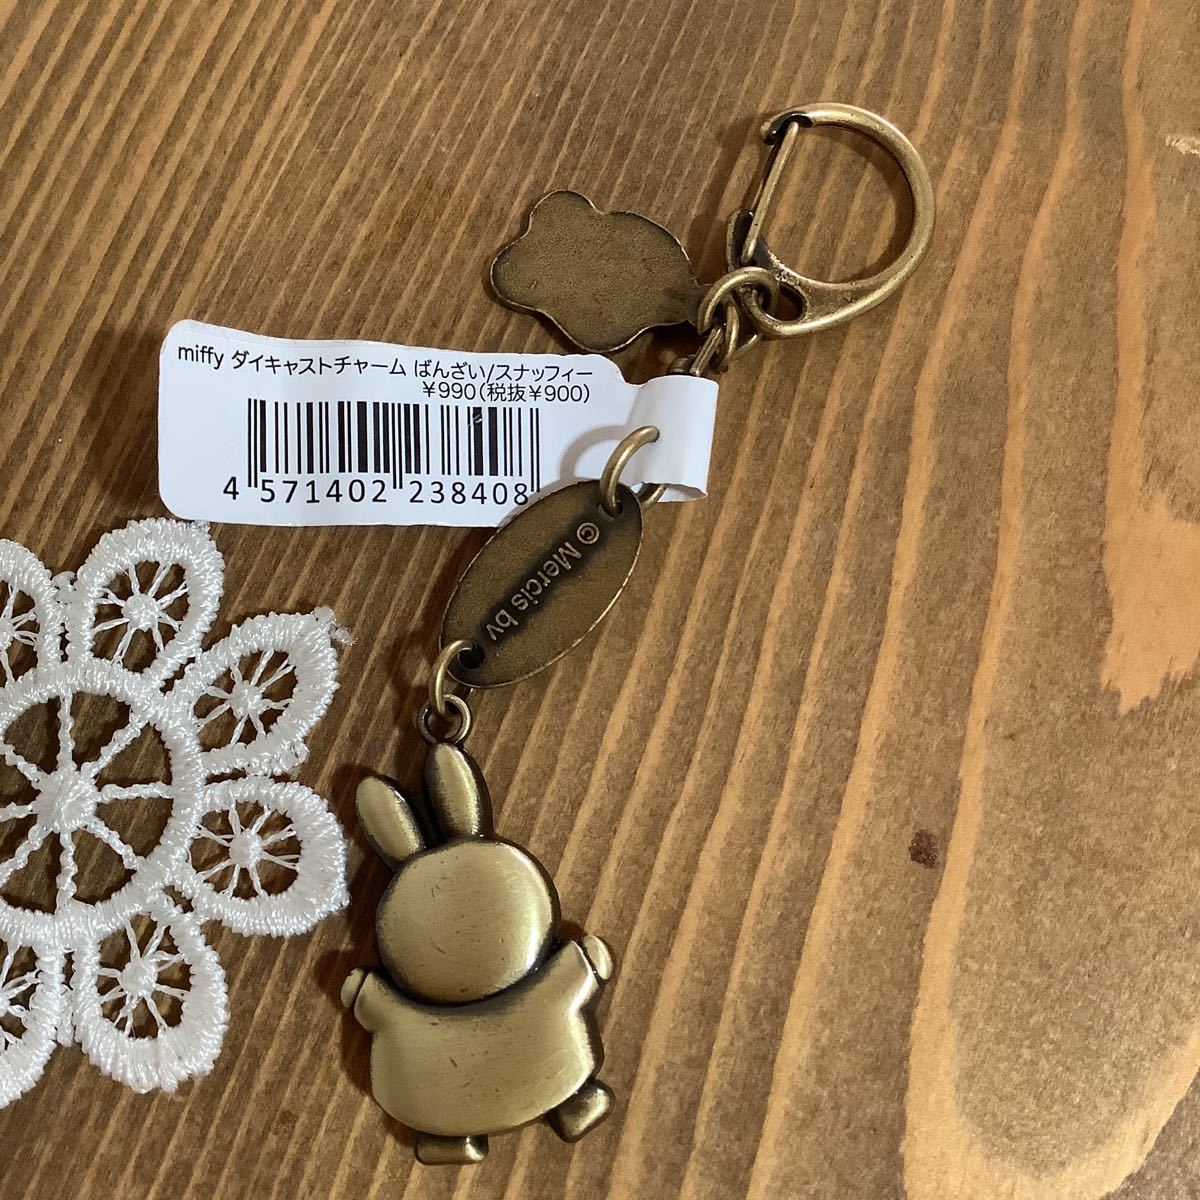  made in Japan Miffy alloy key holder postage 120 new goods key ring key holder alloy.